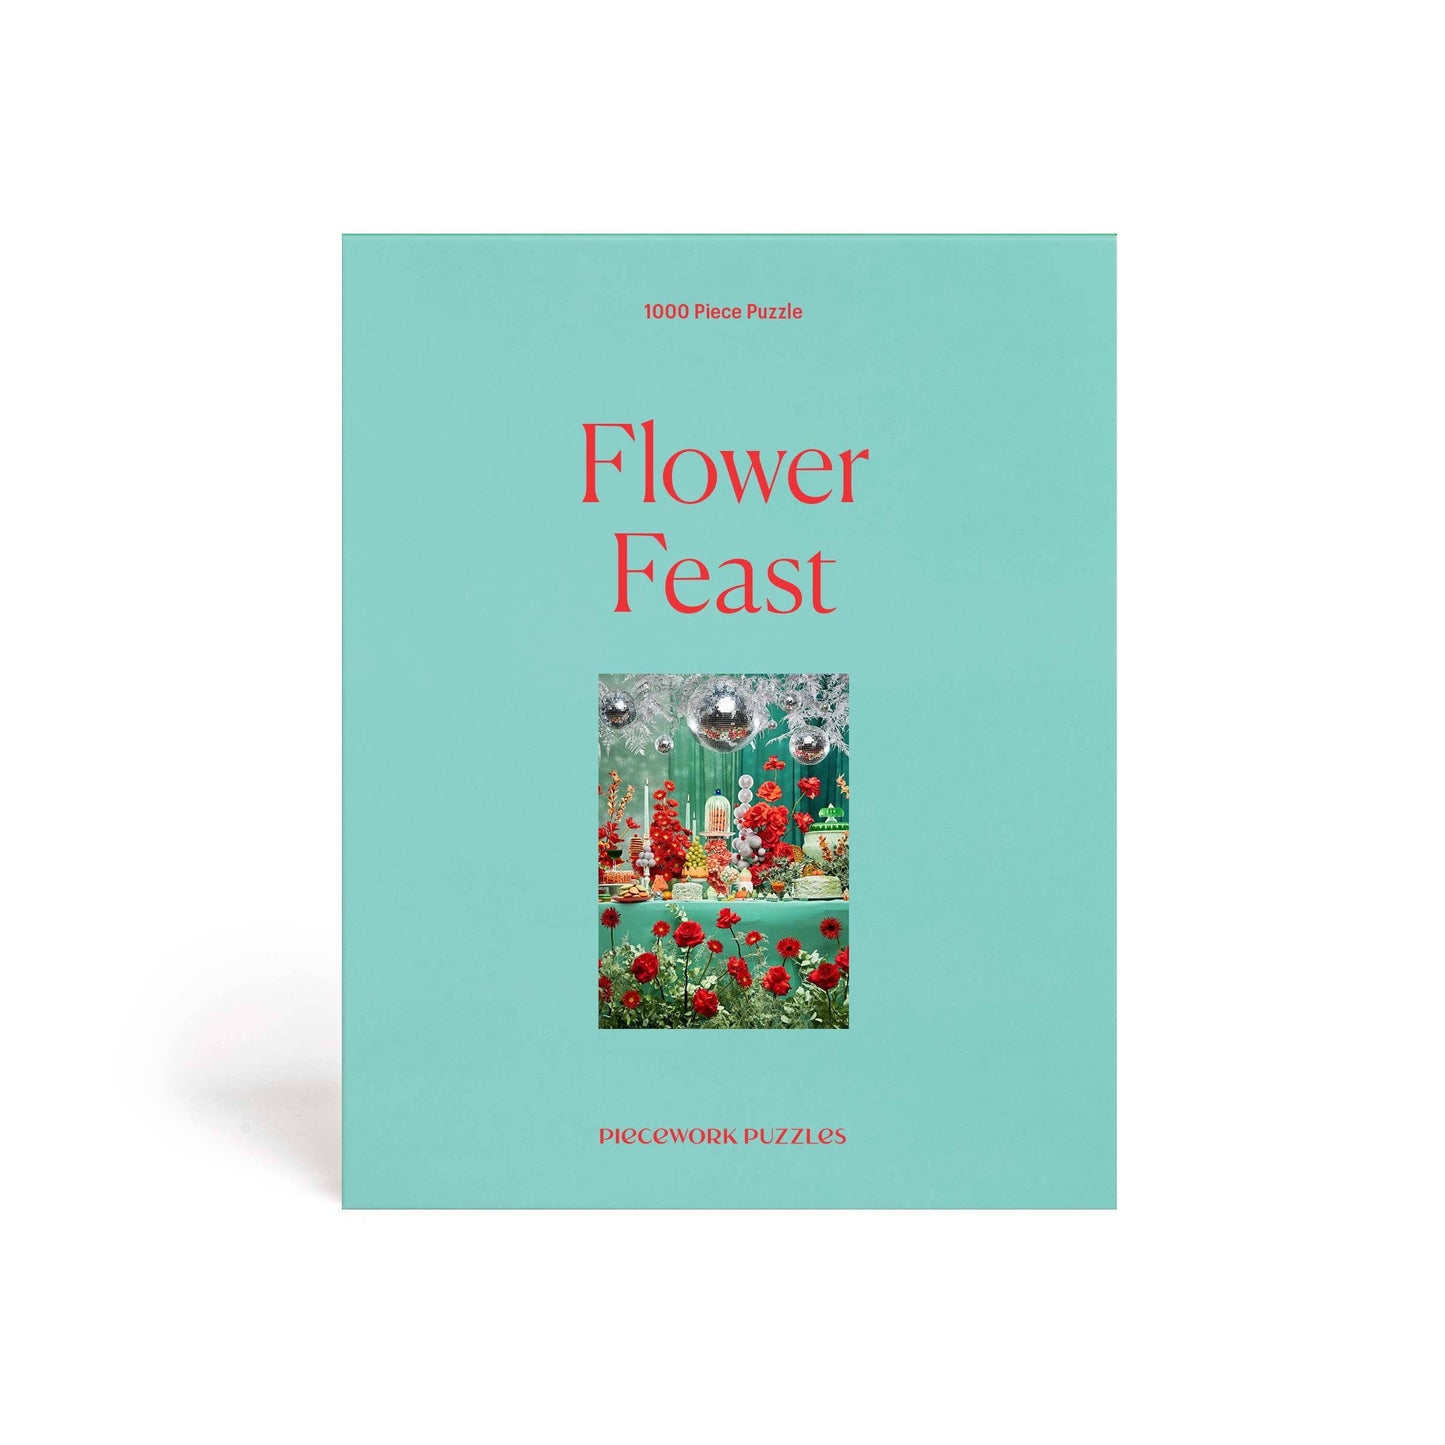 Piecework Puzzles (1000 Pieces) - Games - Piecework Puzzles - Hops Petunia Floral